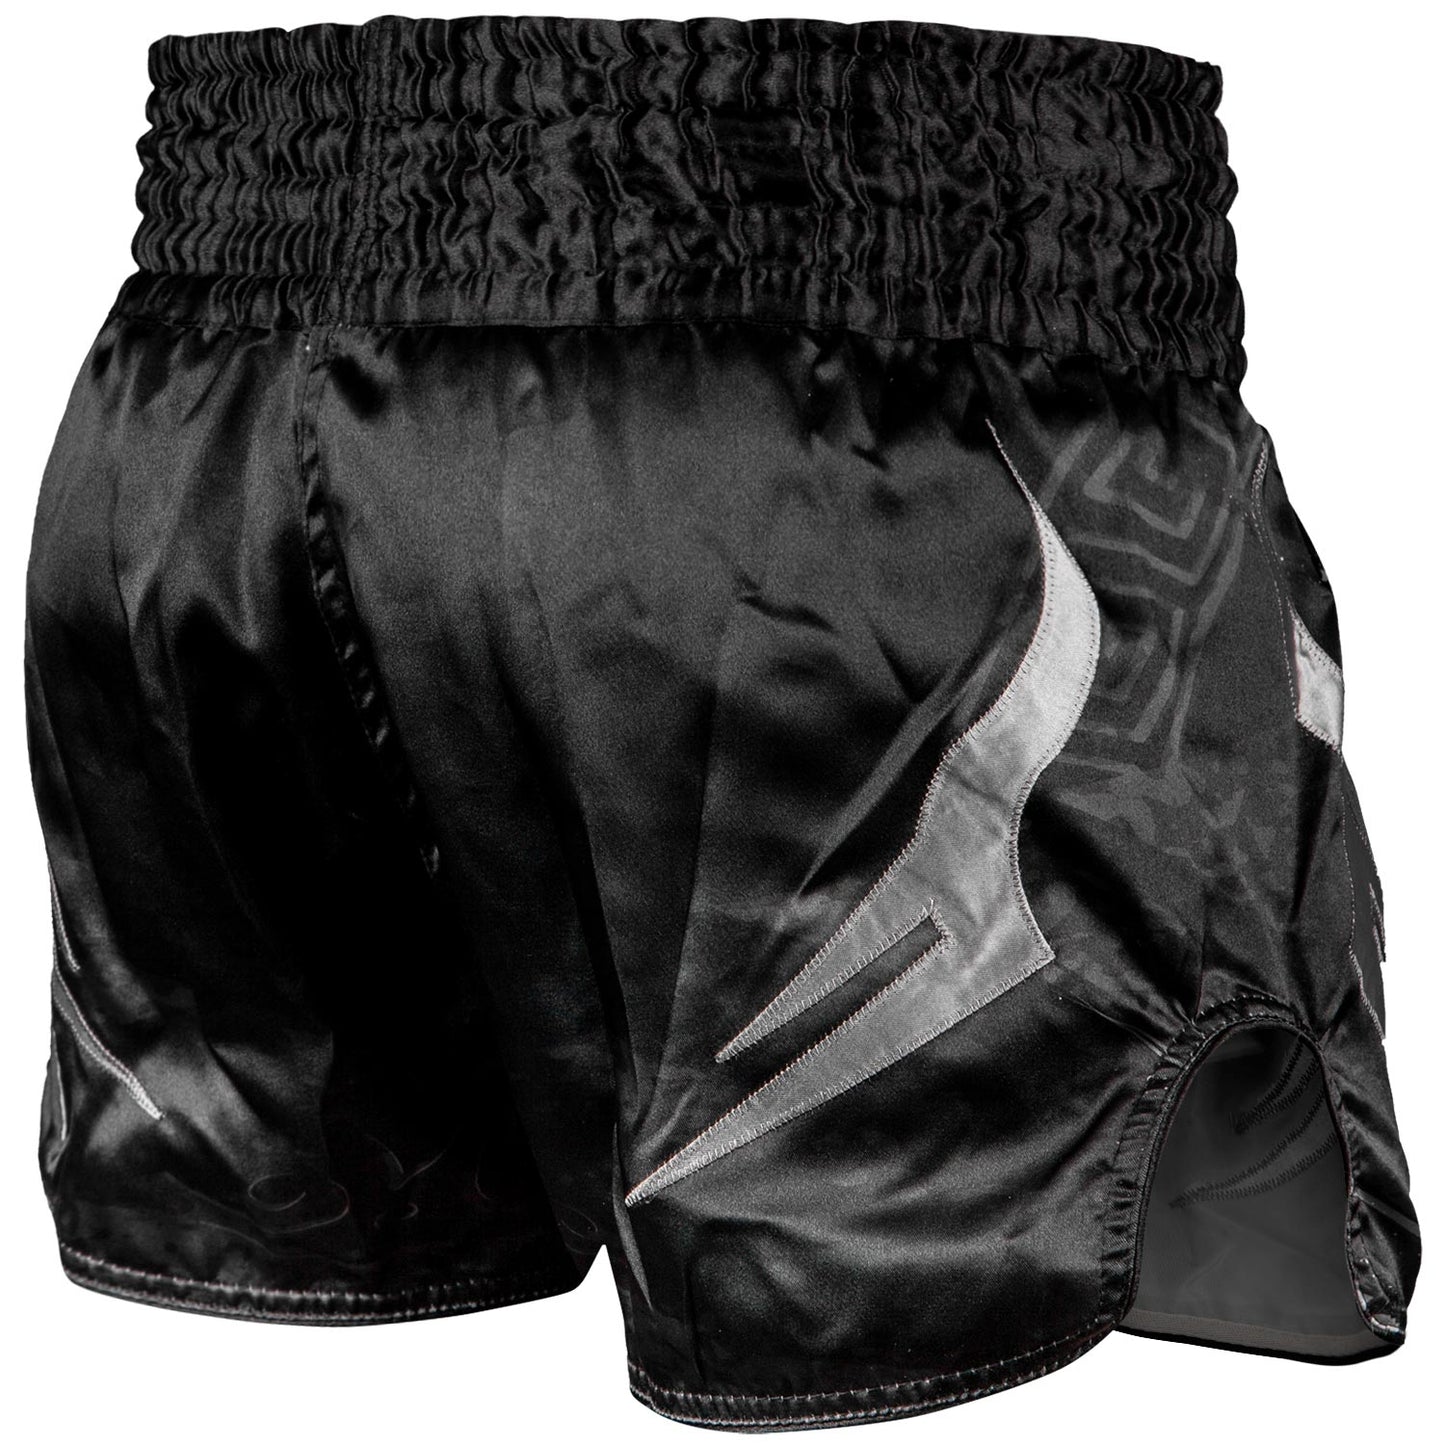 Pantalones Cortos Muay Thai Venum Gladiator 3.0 - NEGRO/BLANCO